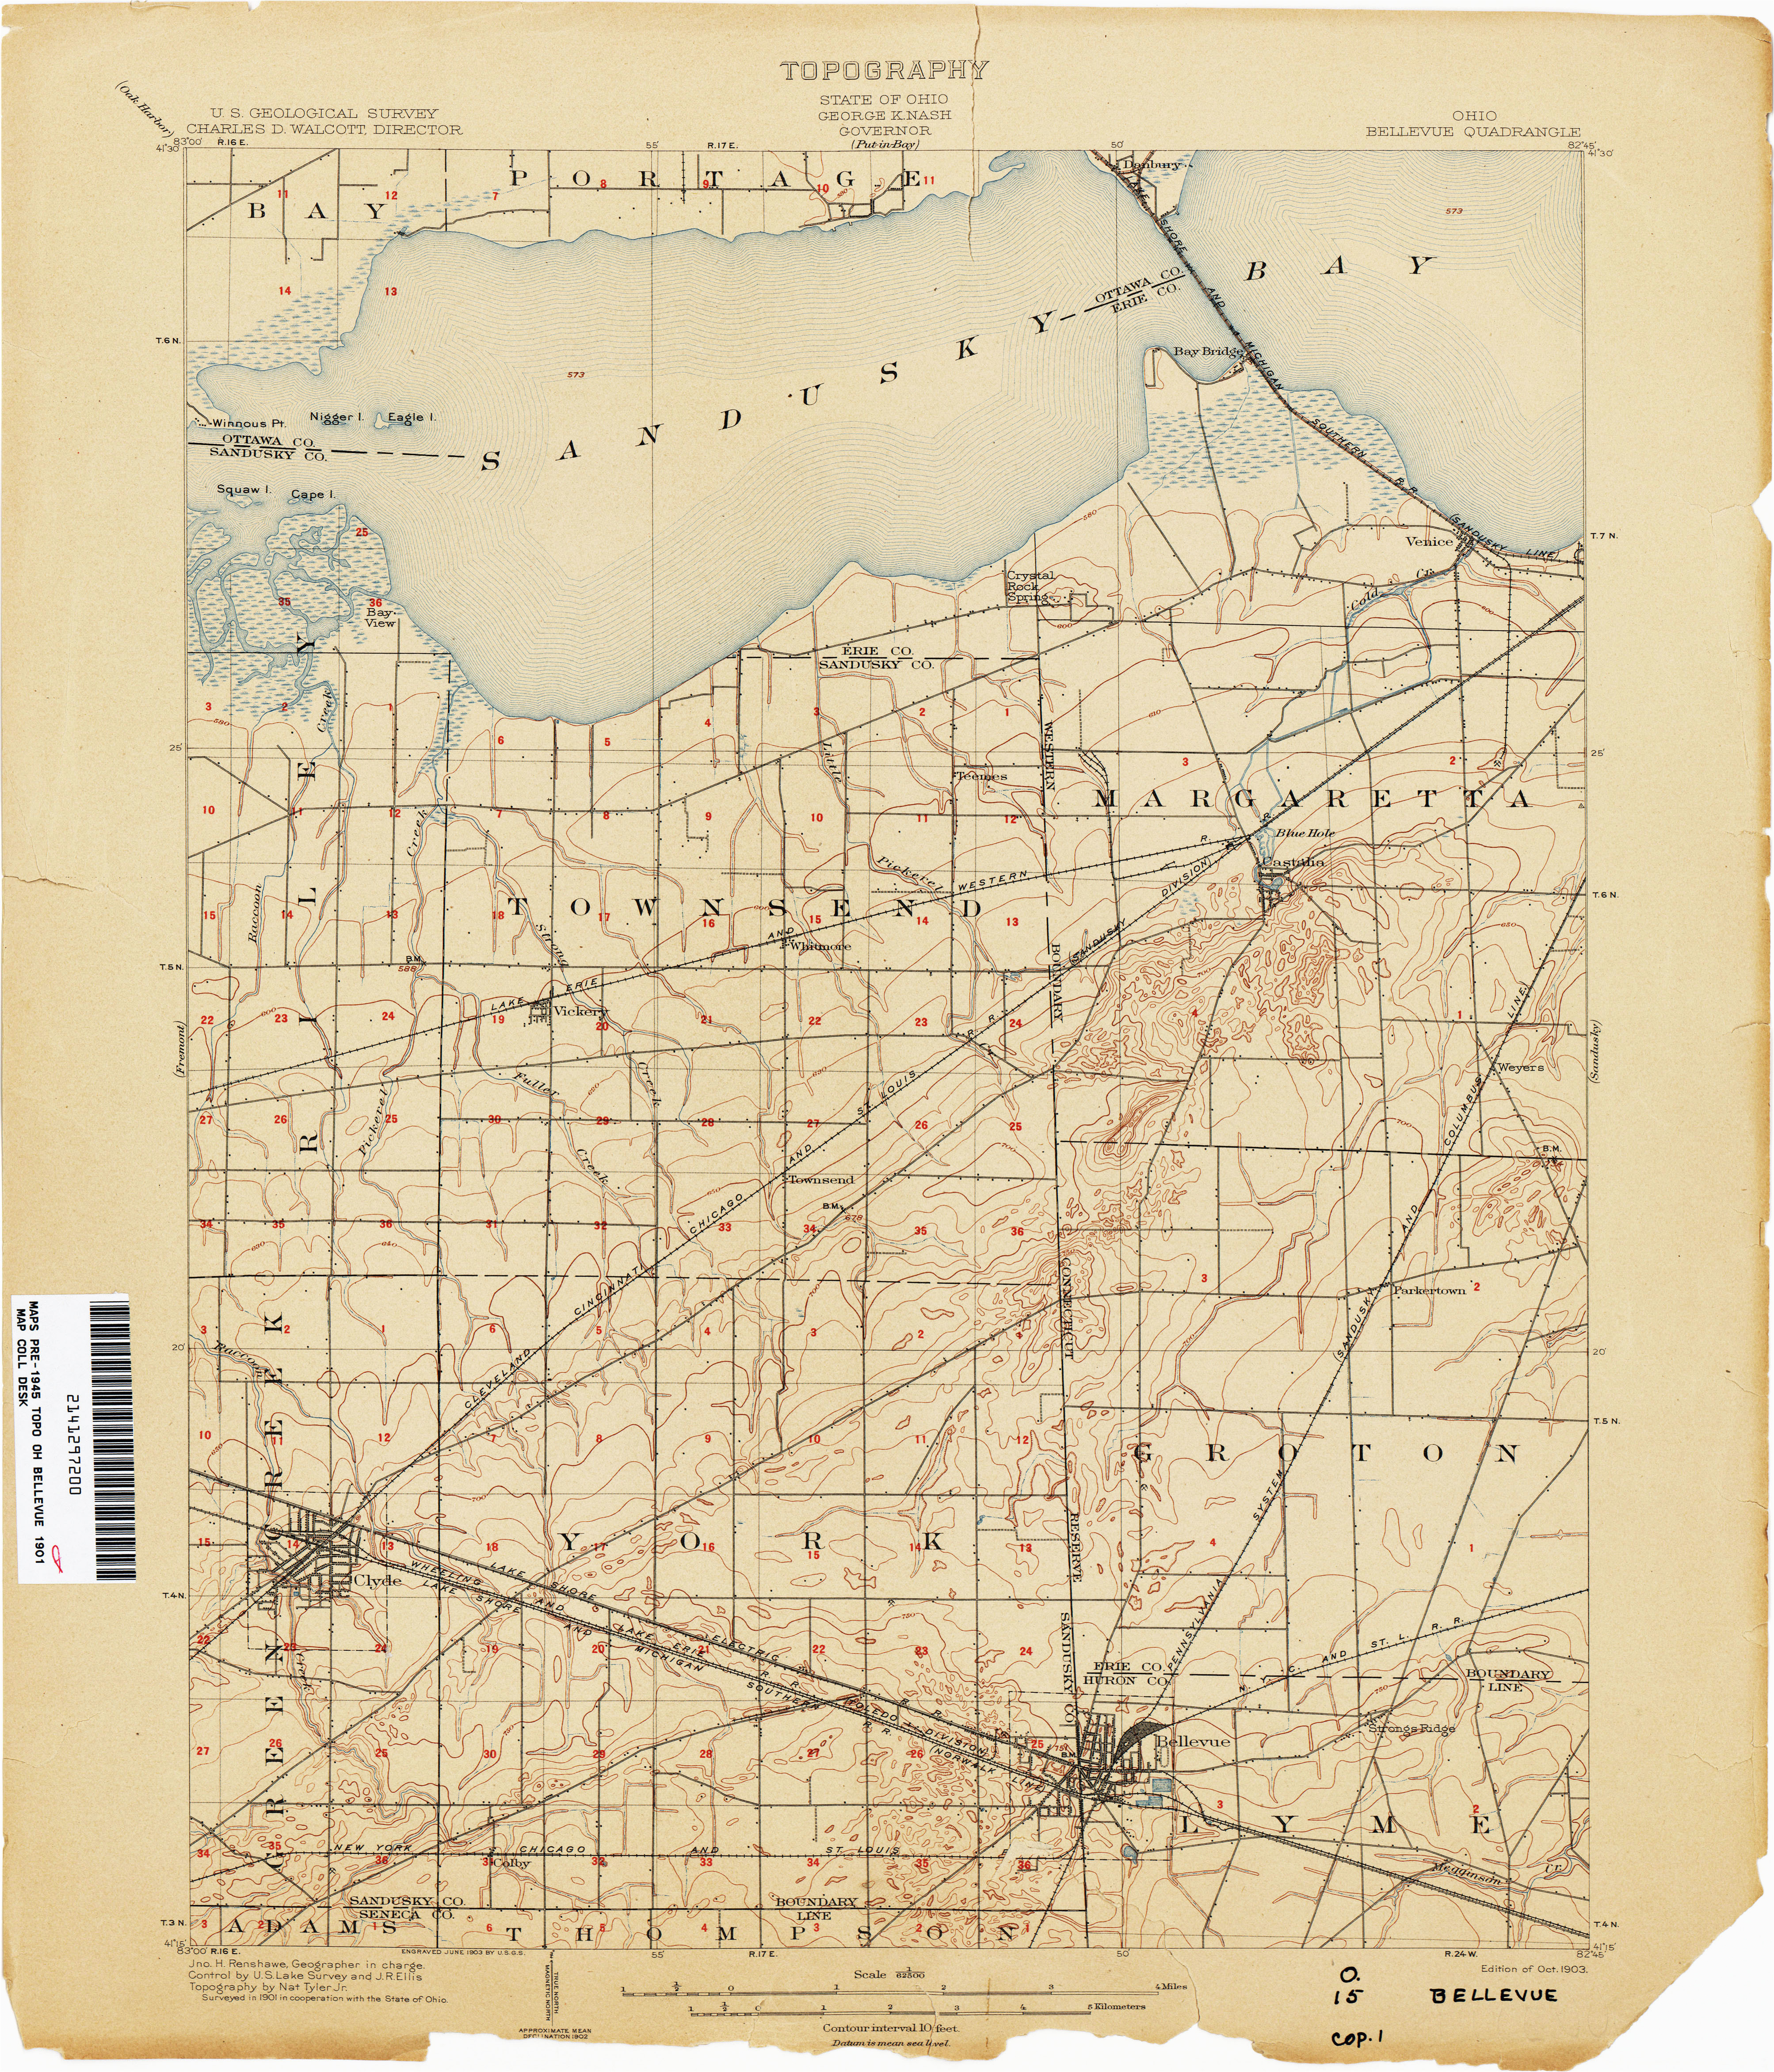 Upper Sandusky Ohio Map Ohio Historical topographic Maps Perry Castaa Eda Map Collection